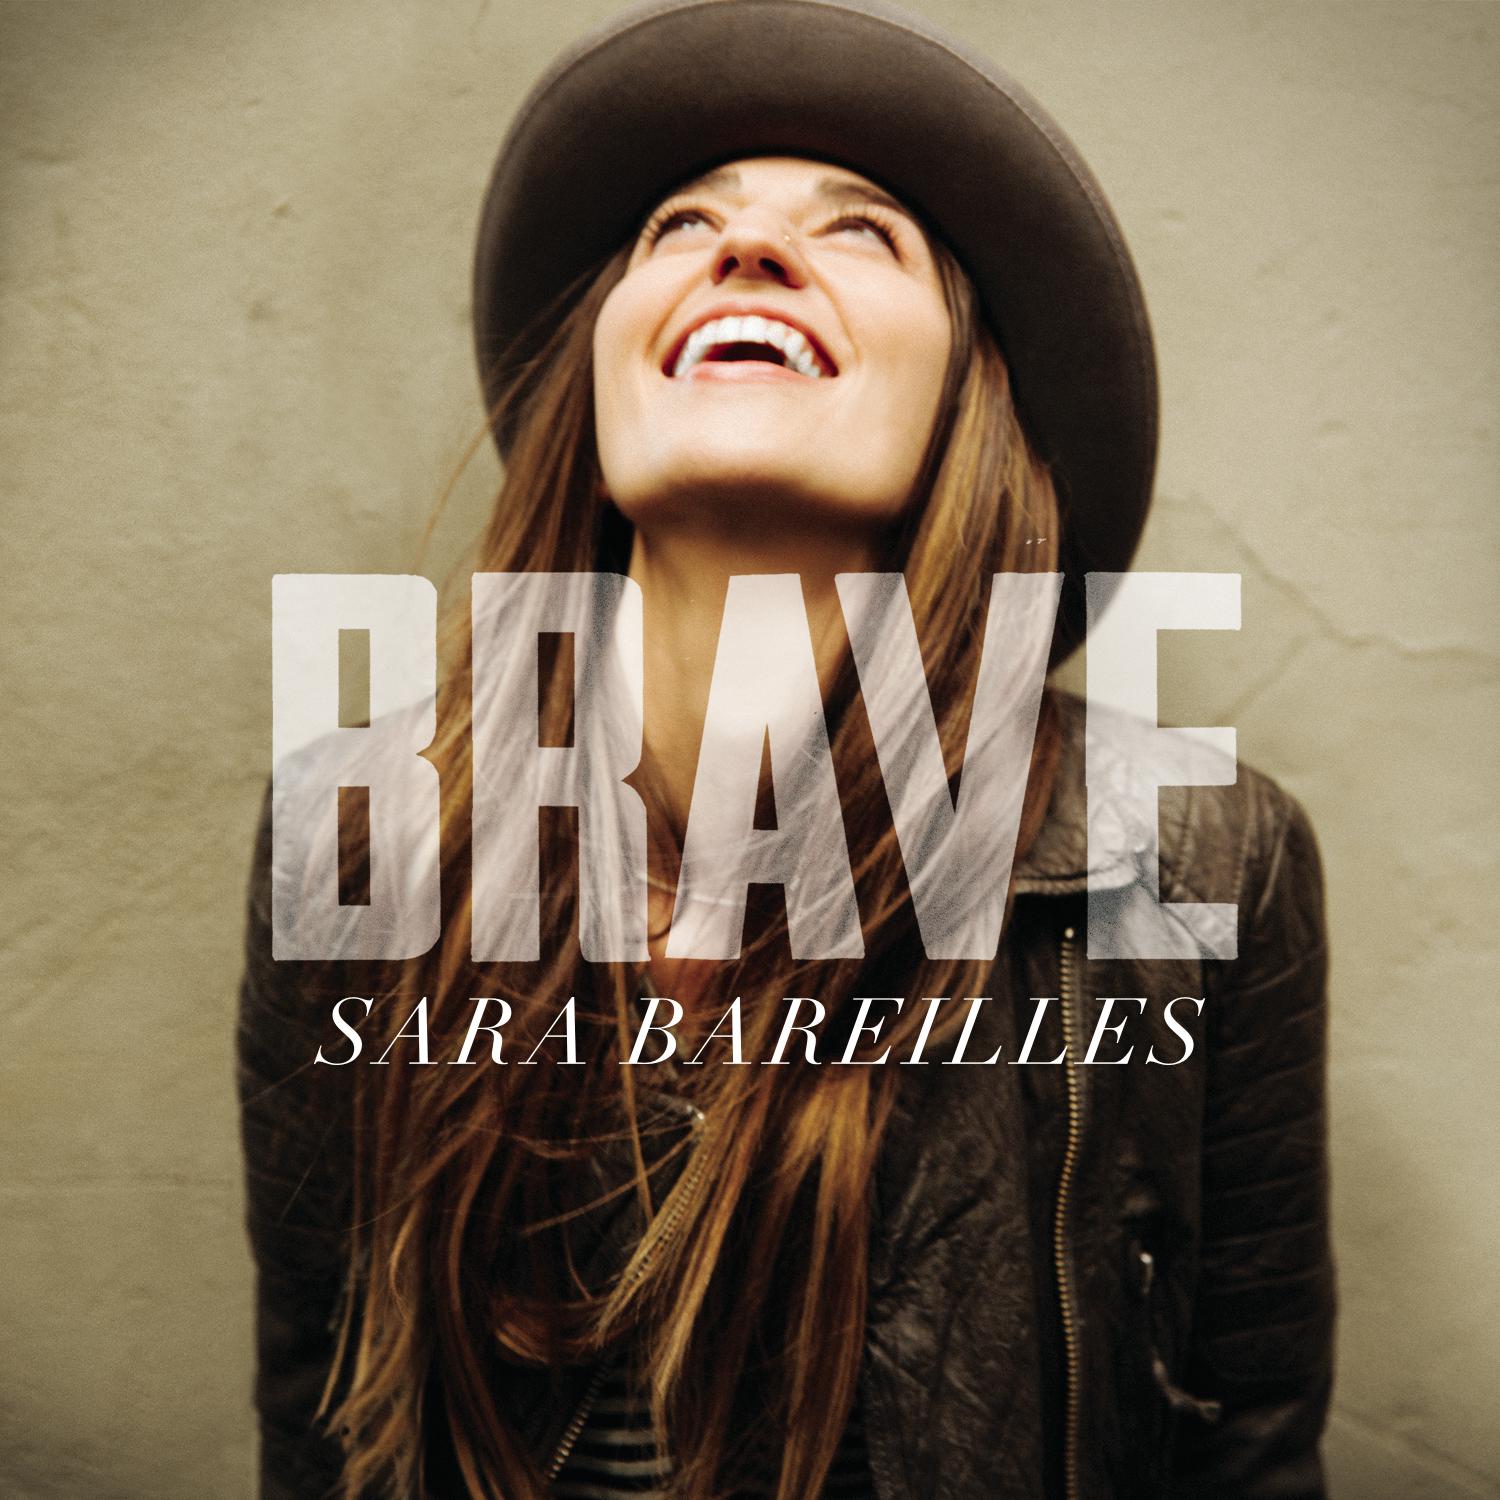 brave(莎拉·巴萊勒斯演唱歌曲)